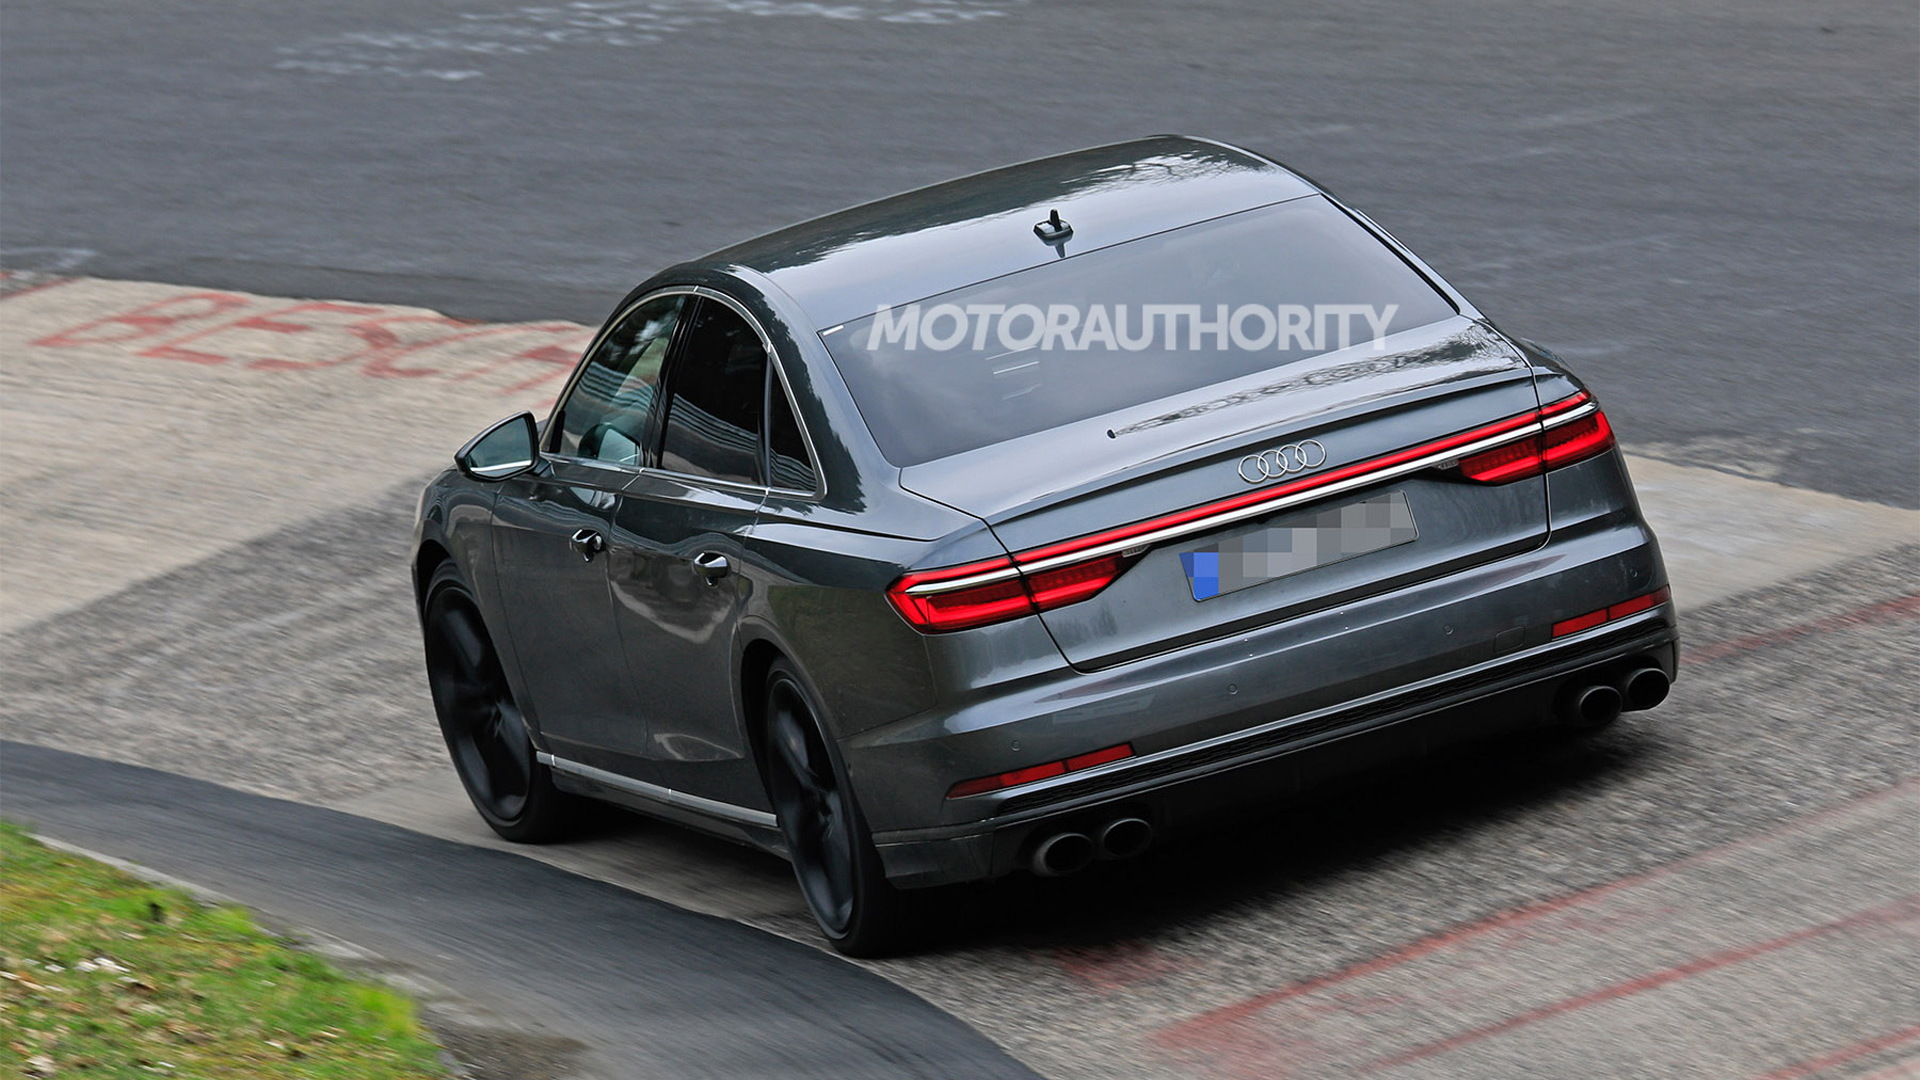 2020 Audi S8 spy shots - Image via S. Baldauf/SB-Medien